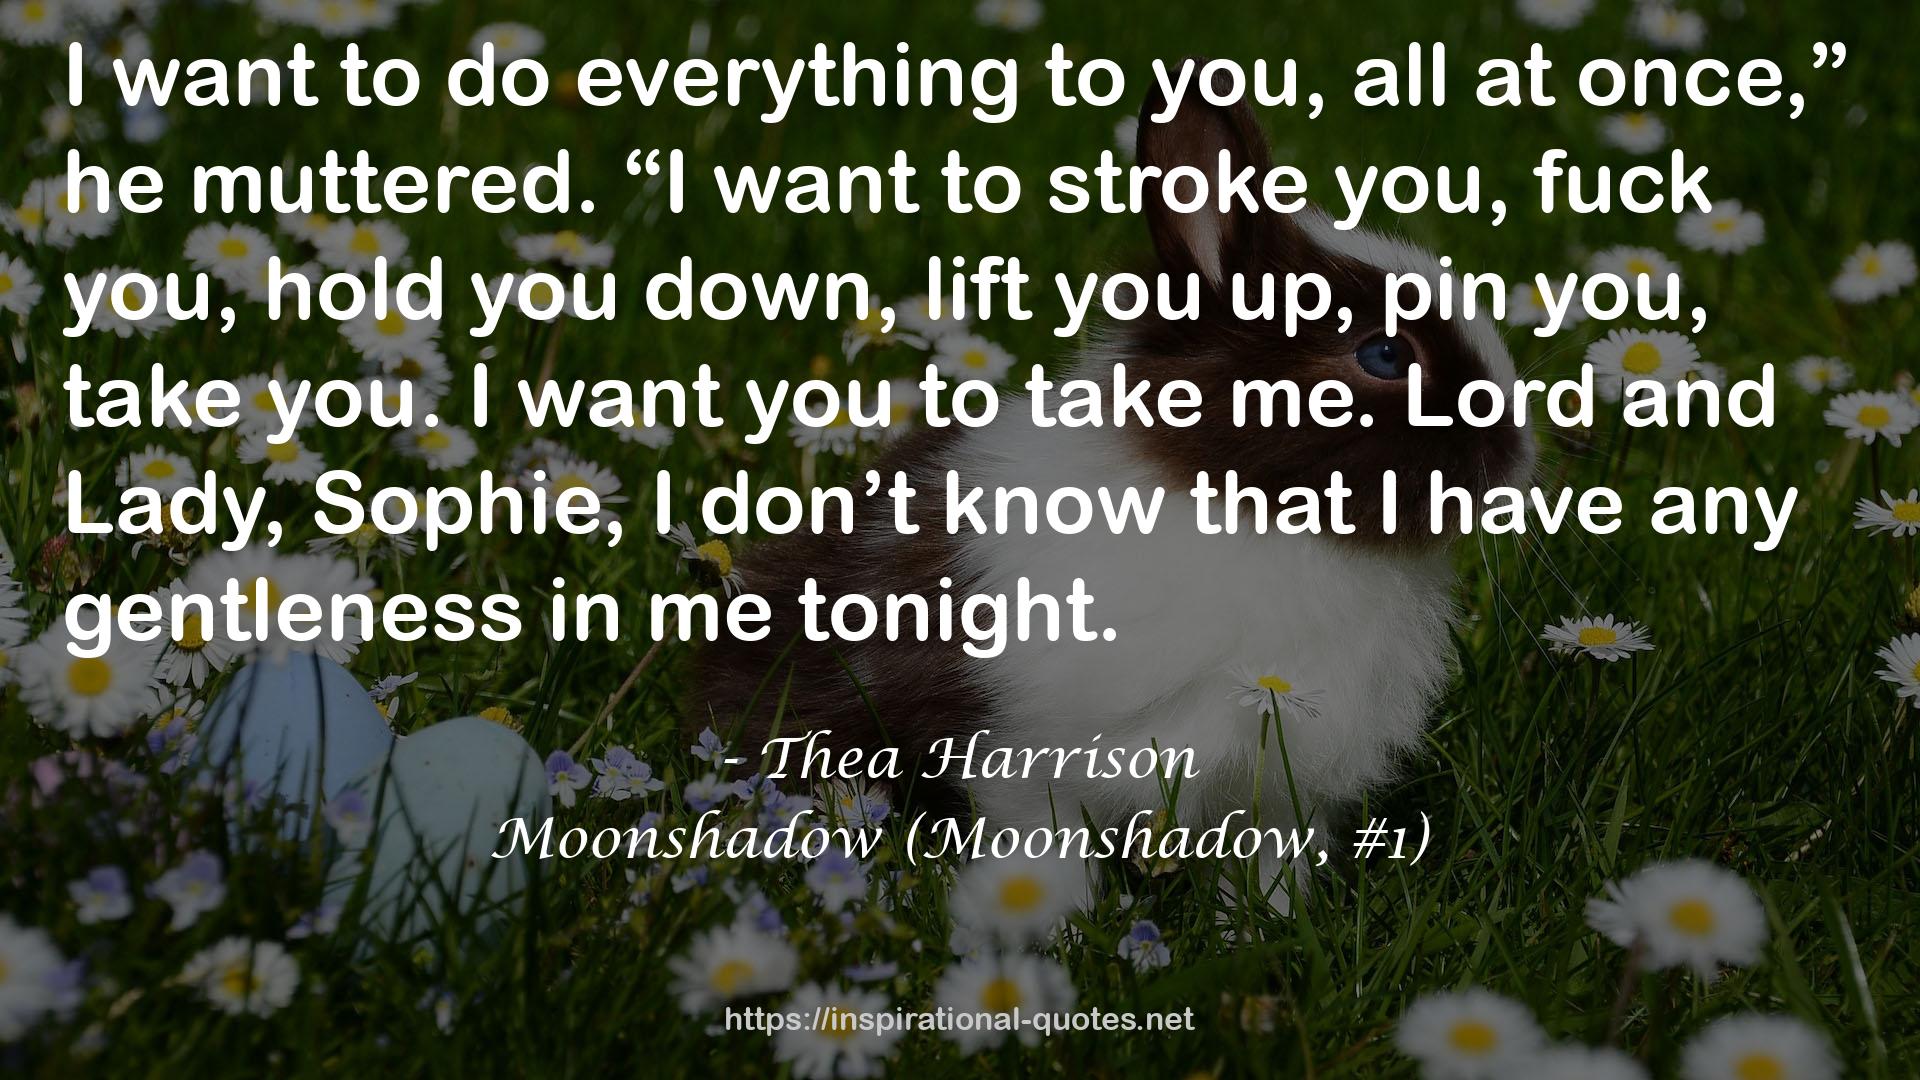 Moonshadow (Moonshadow, #1) QUOTES